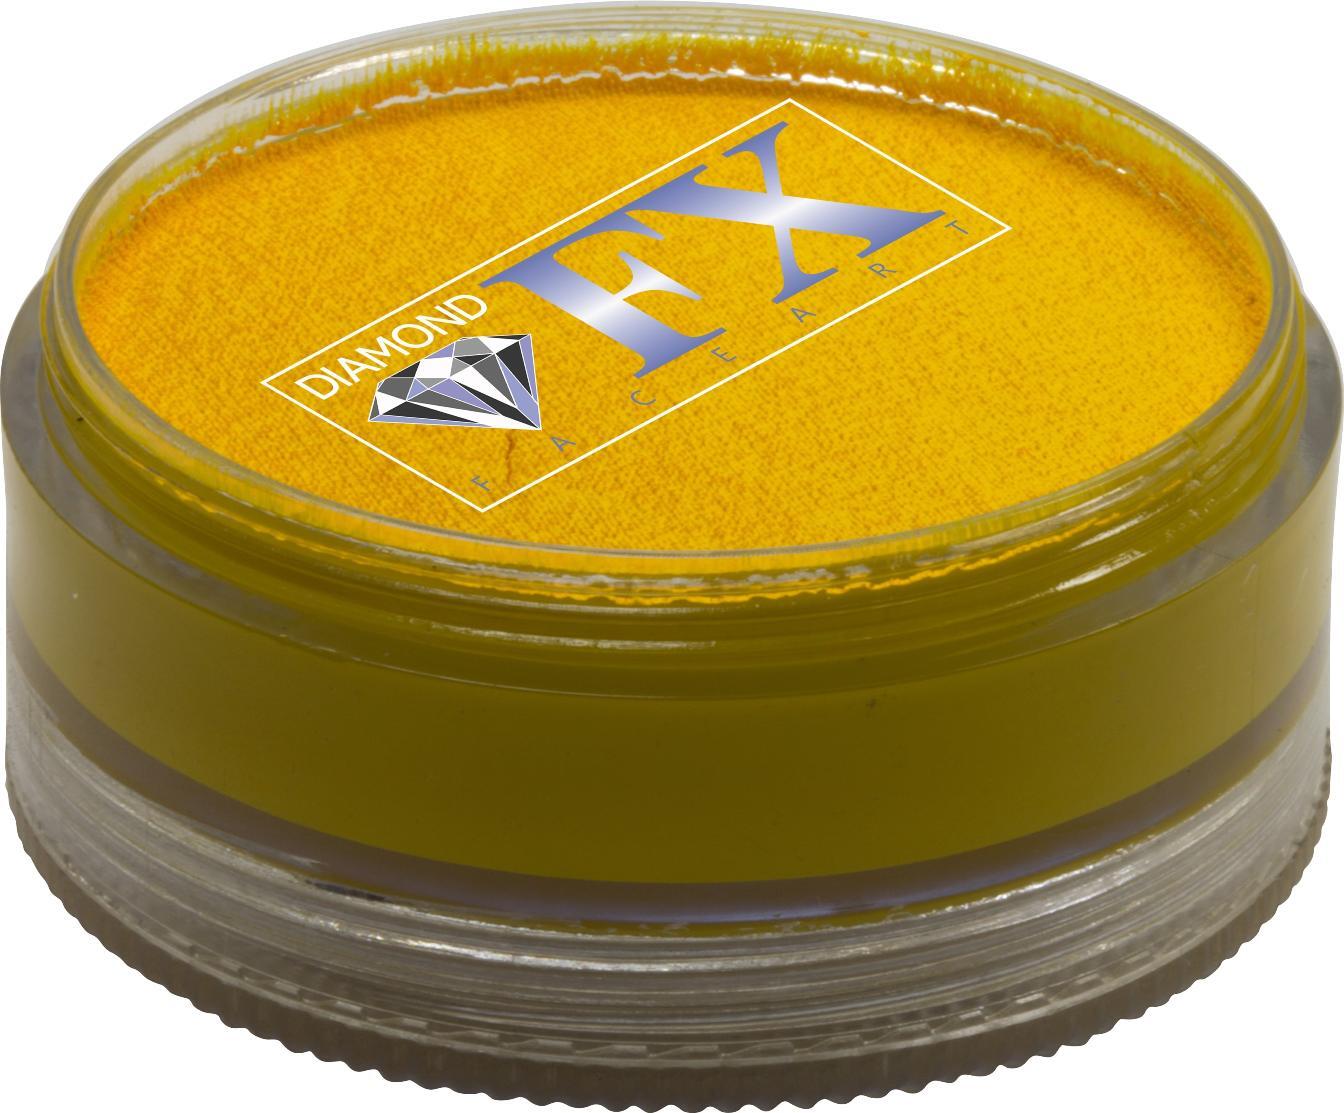 Diamond FX Yellow 90g - Small Image